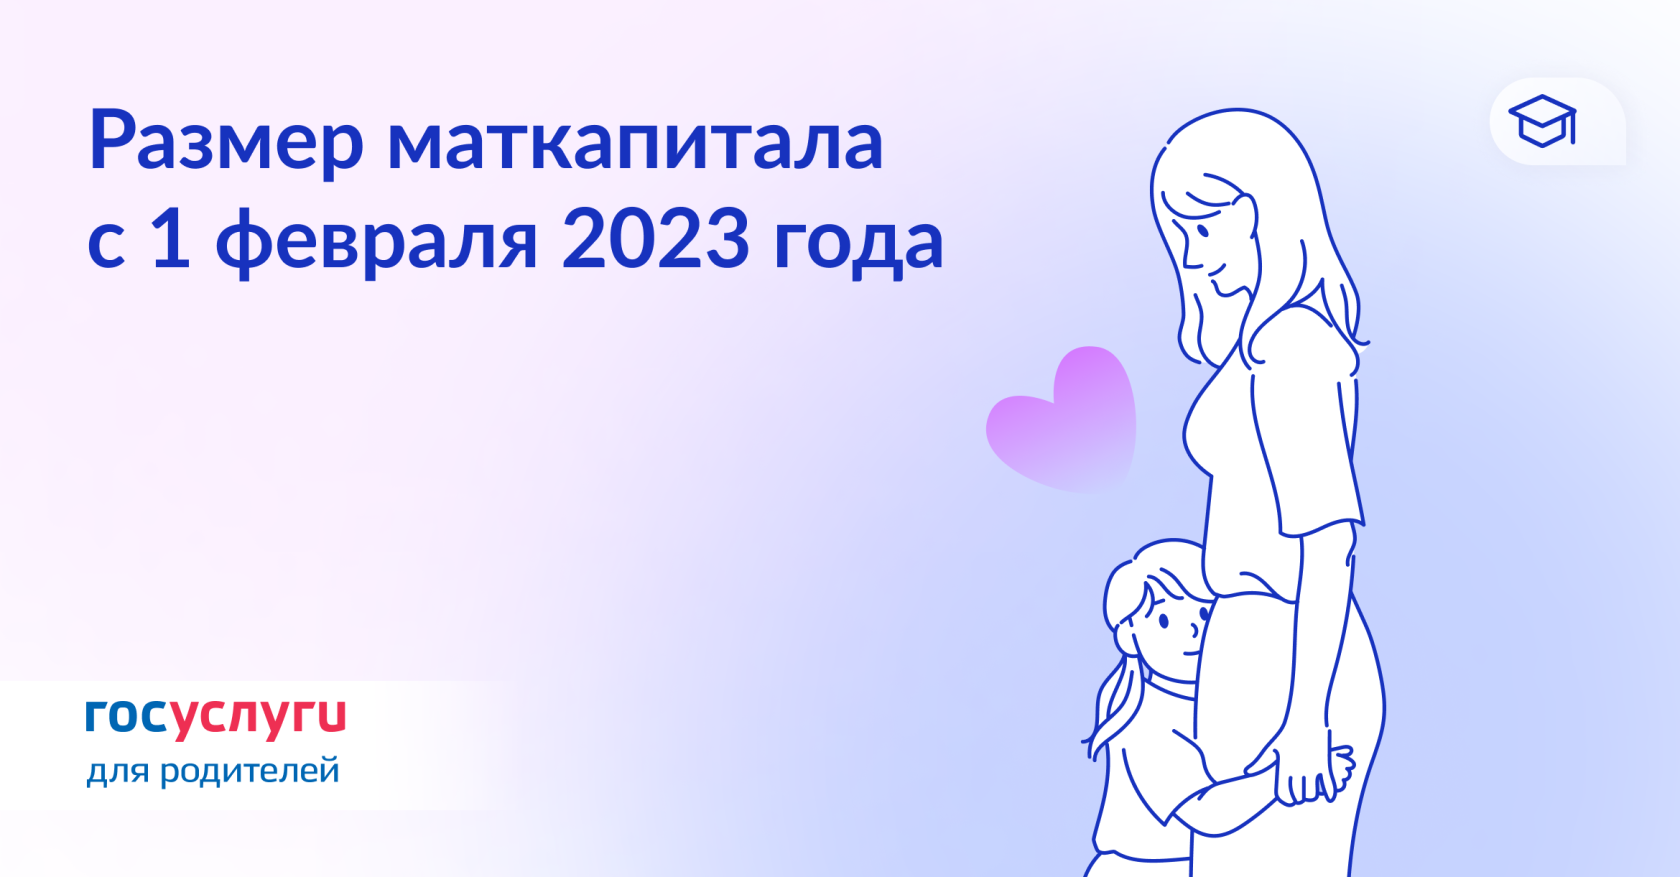 Материнский капитал на второго в 2023 году. Материнский капитал в 2023 году. Индексация материнского капитала в 2023. Сумма материнского капитала в 2023 году. Индексация мат капитала в 2023 году.